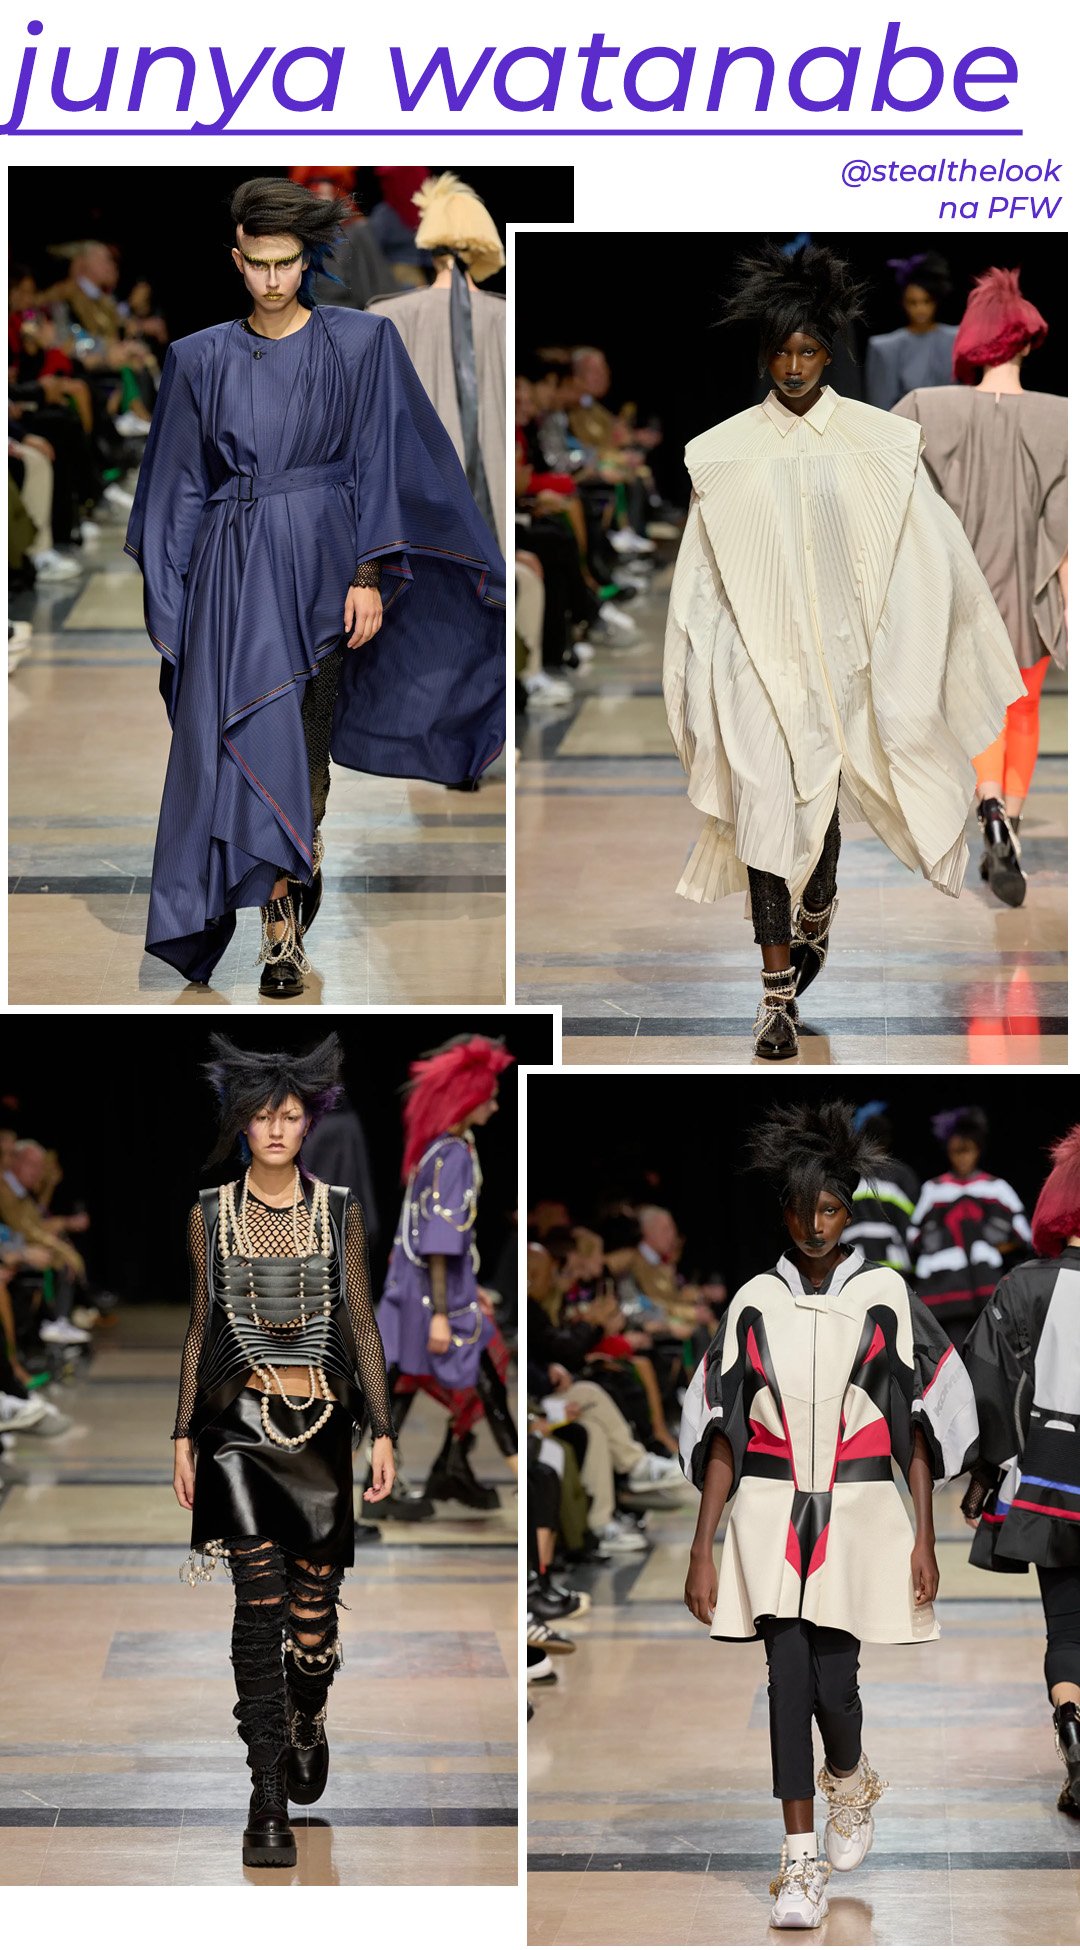 Junya Watanabe S/S 2023 - roupas diversas - Paris Fashion Week - Primavera - modelo andando pela passarela - https://stealthelook.com.br